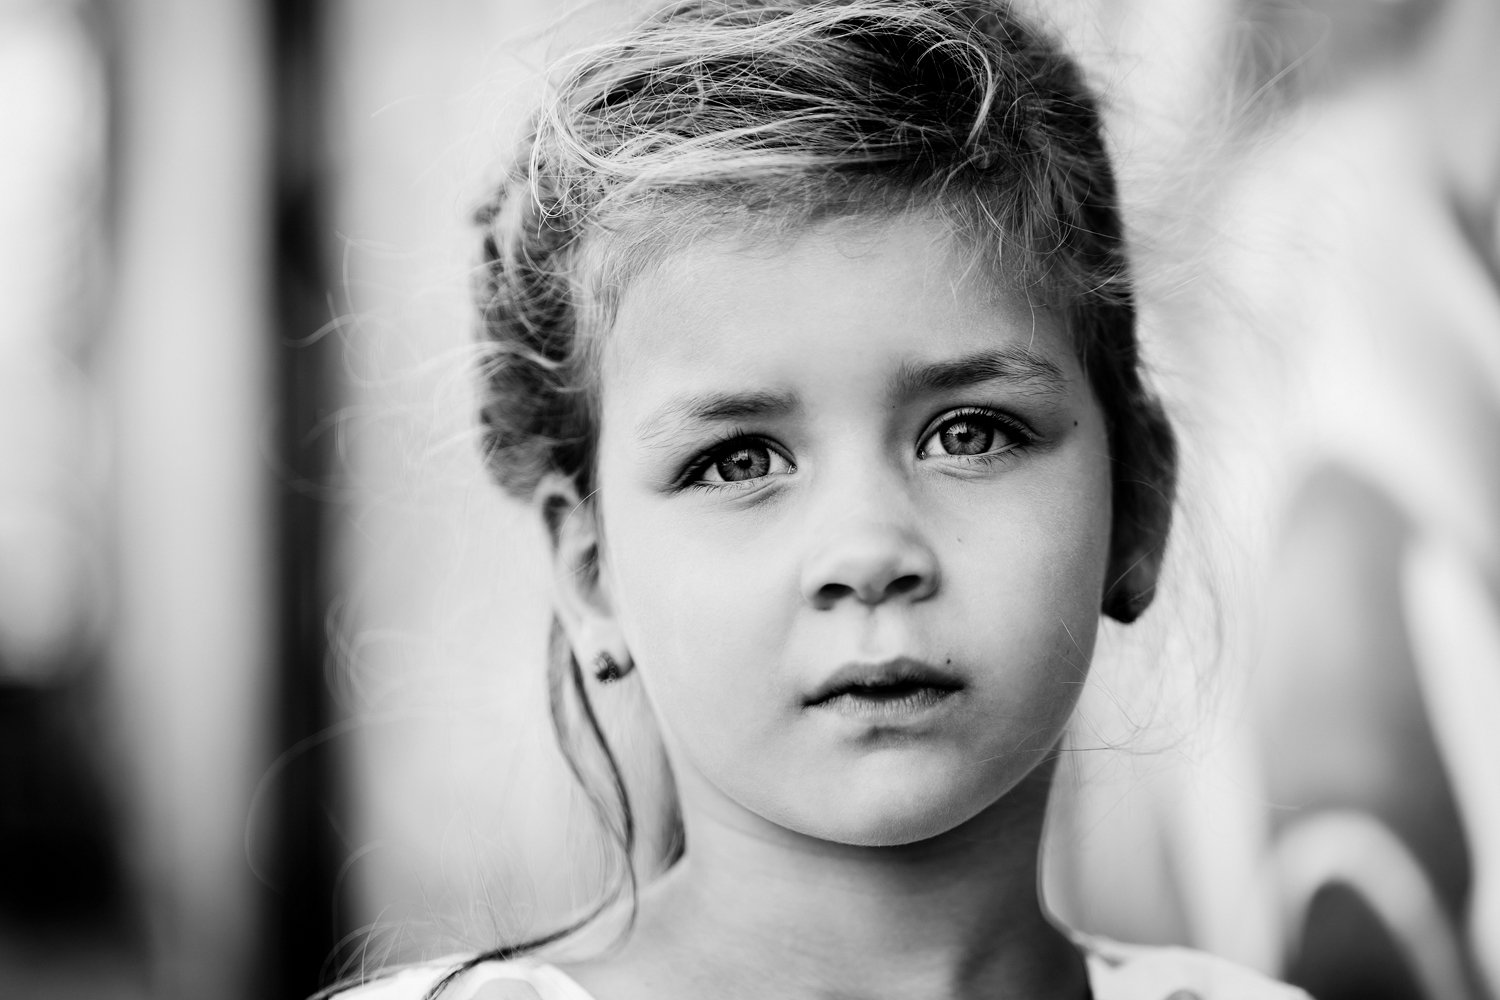 kinderfotografie-portret-fotografie-eindhoven-marijke-krekels-8449.jpg